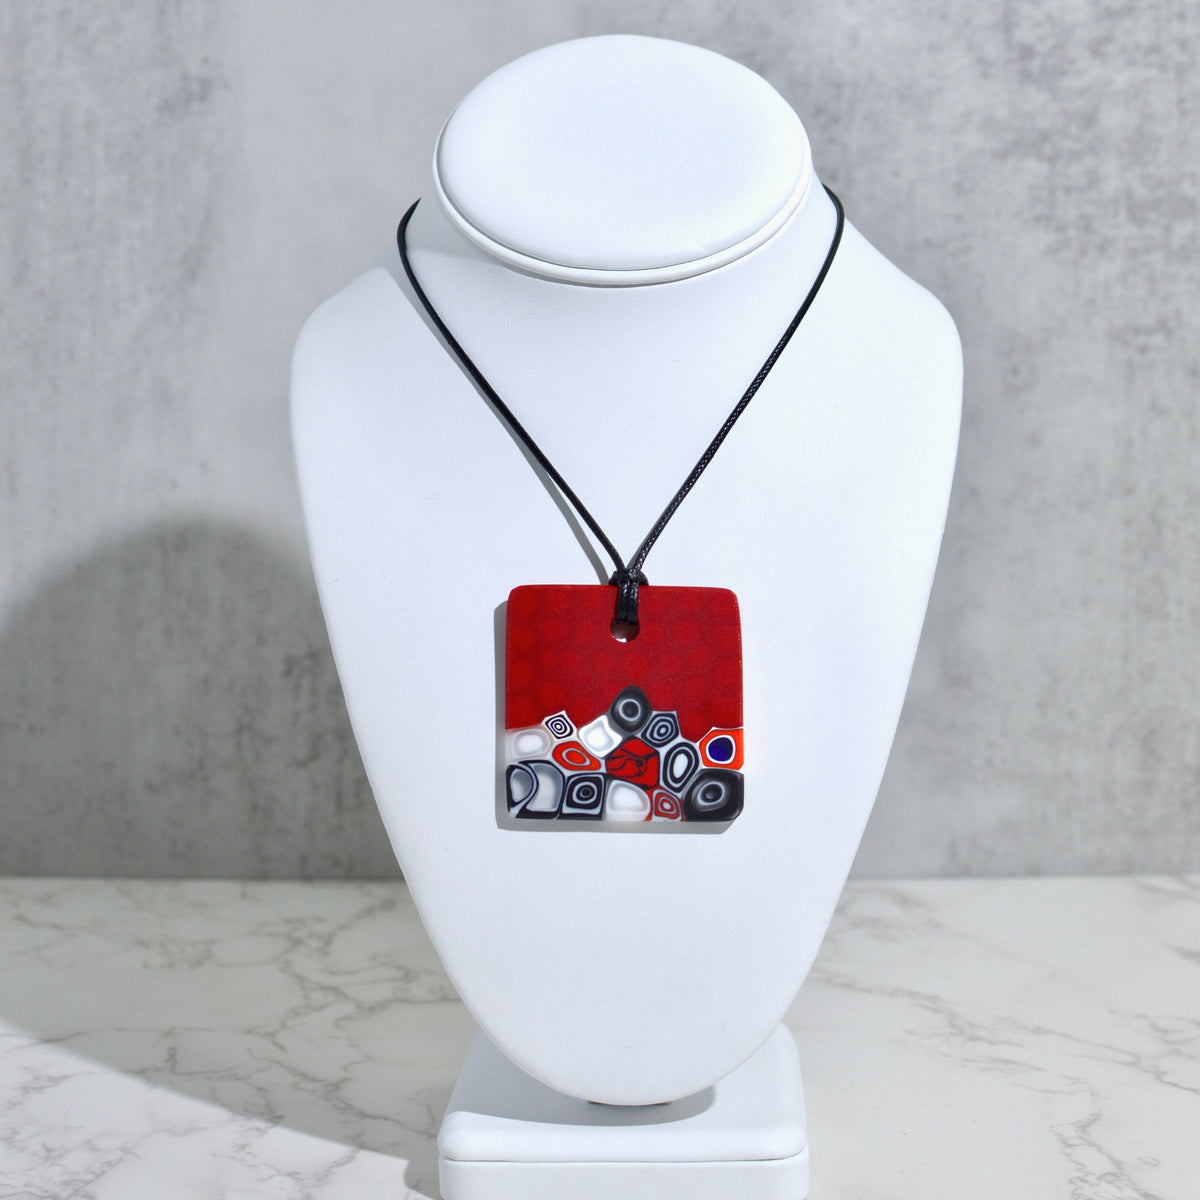 Piastra Millefiori Red Glass Pendant Necklace, Made in Italy - My Italian Decor